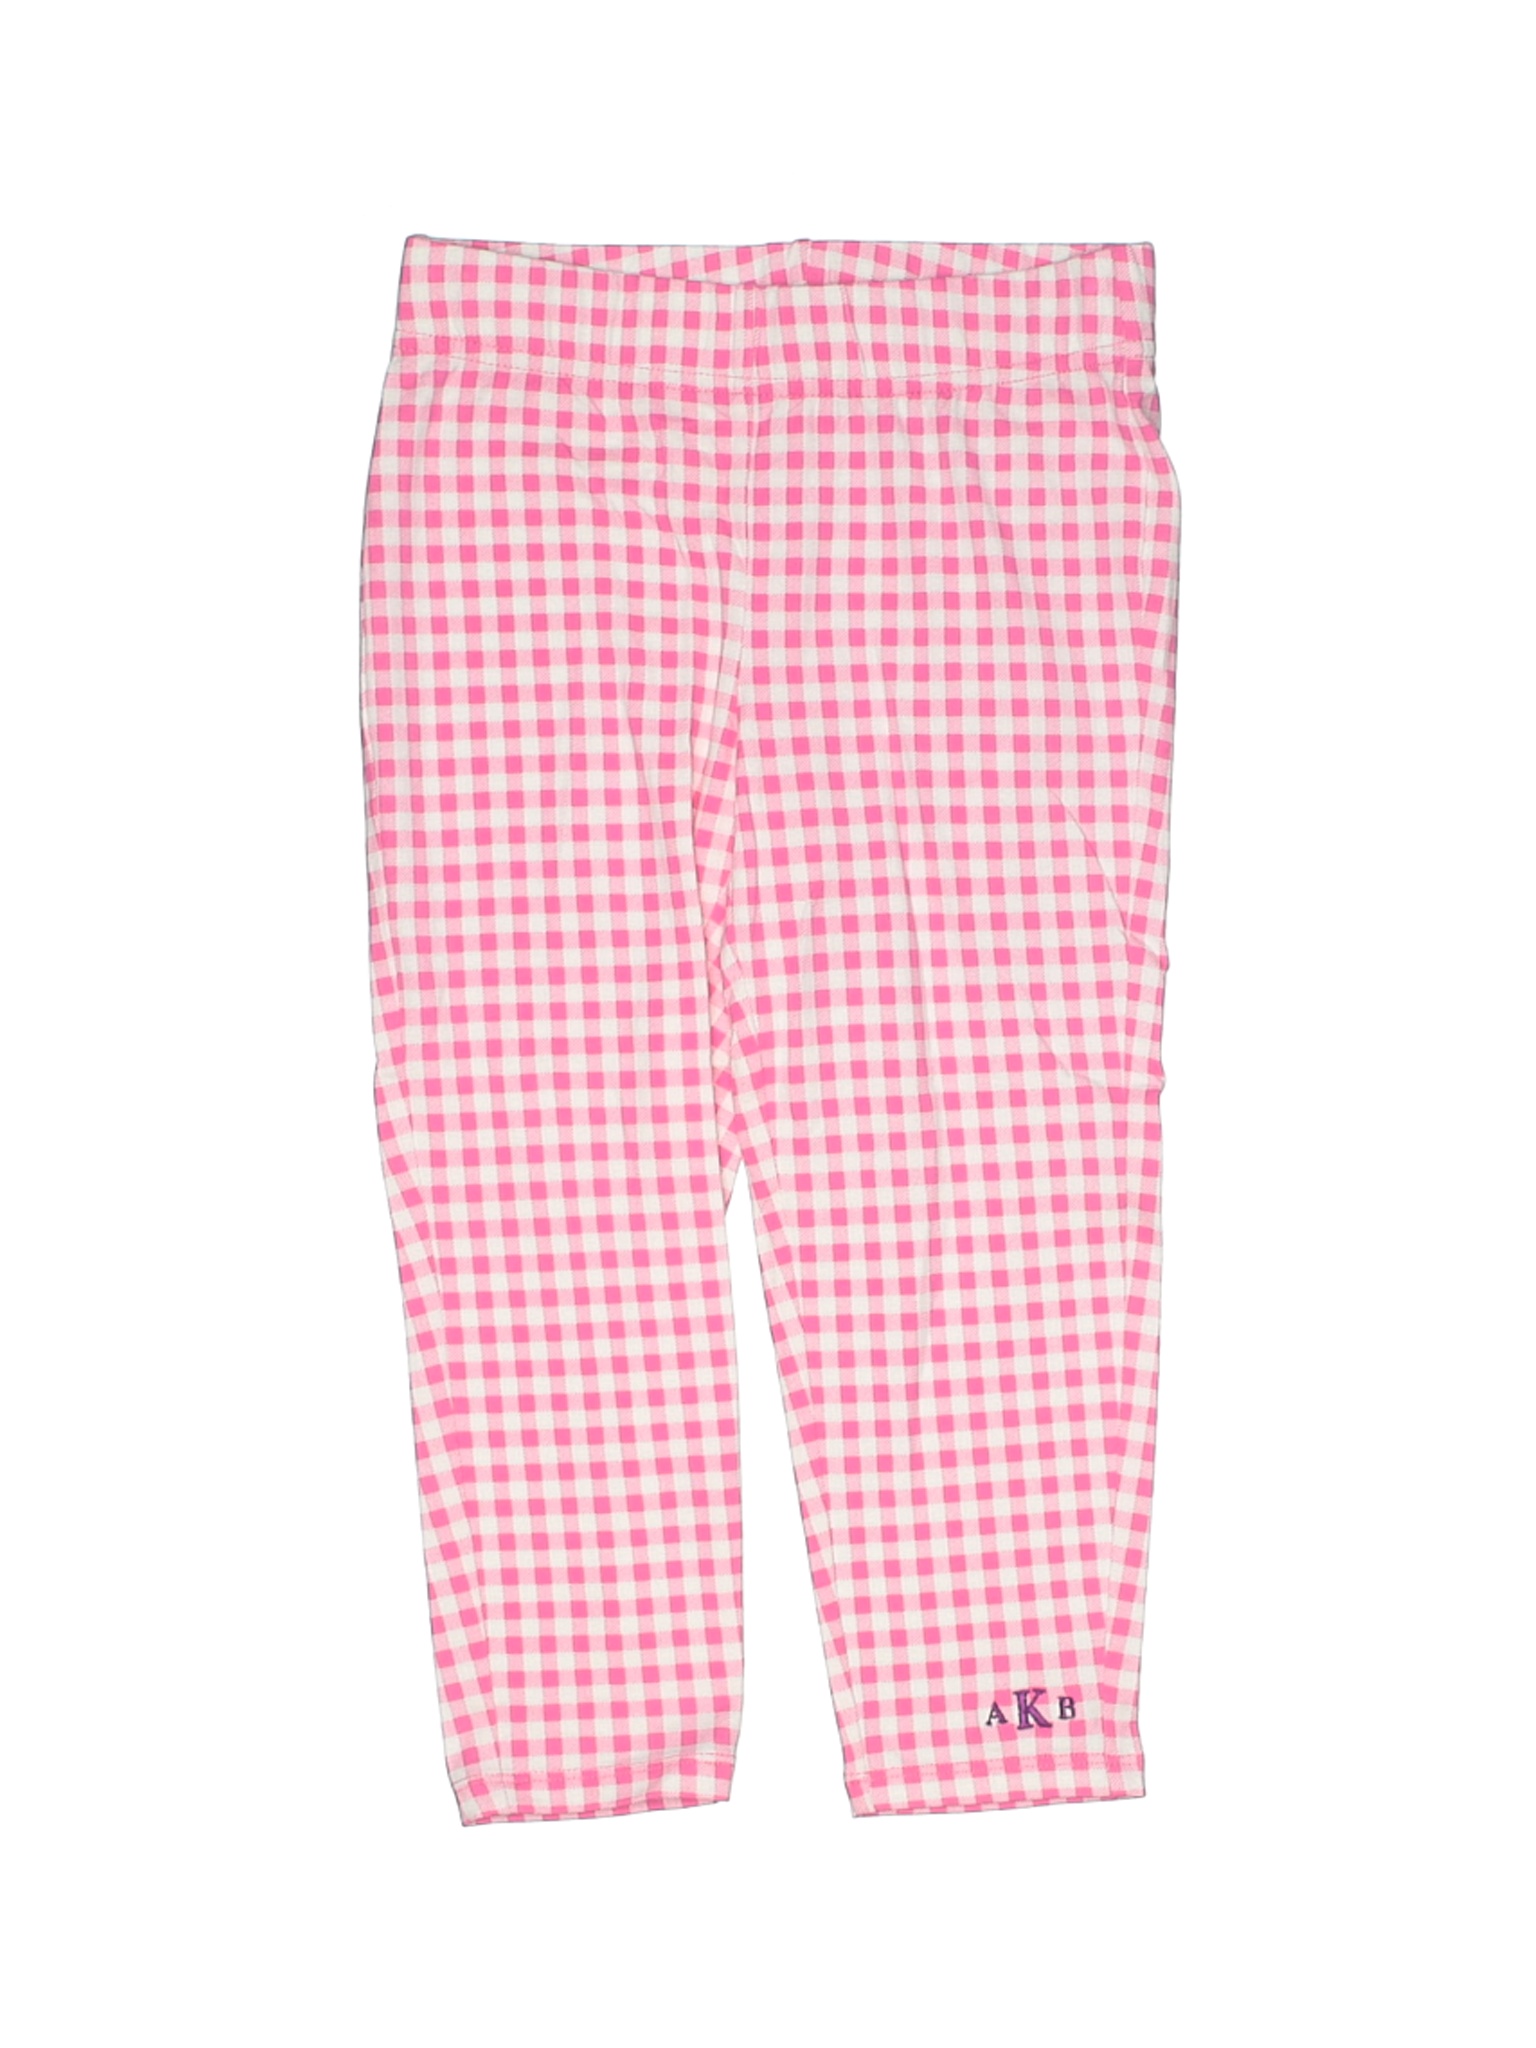 Lands' End Girls Pink Casual Pants 7 | eBay